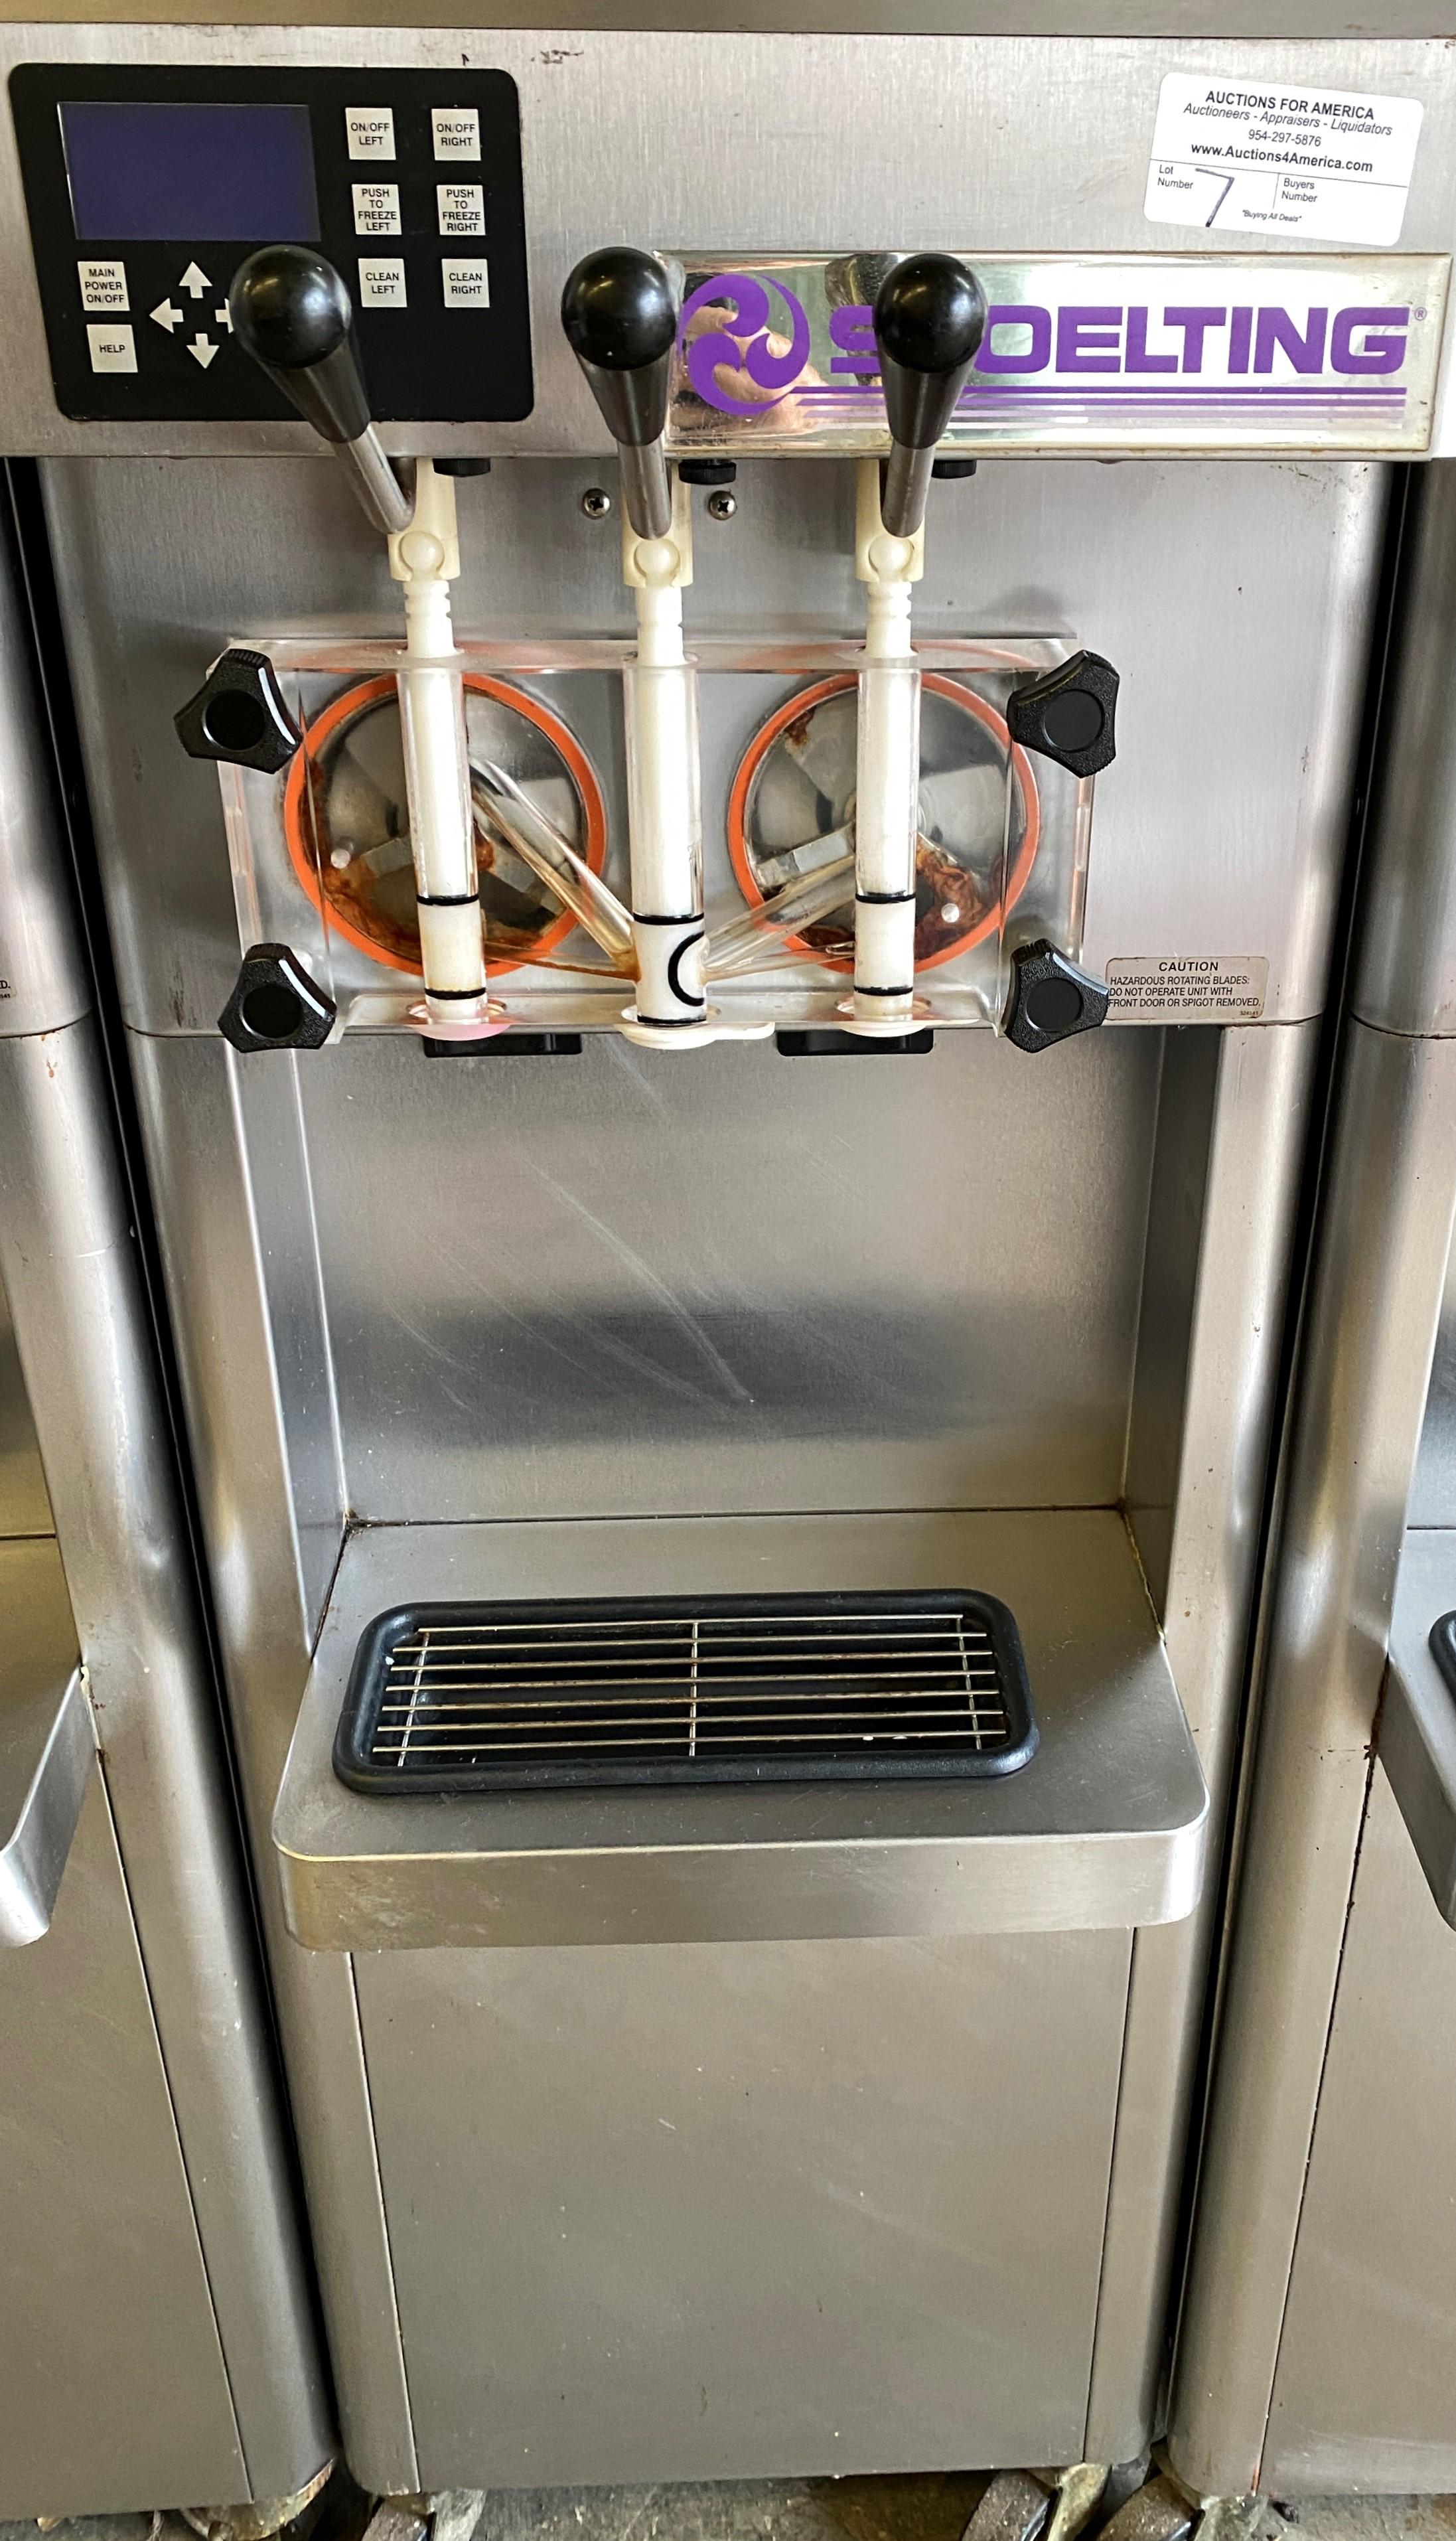 Stoelting Model F231, Three Phase, Soft Serve, Ice Cream And Yogurt Machine. Water Cooled. Original